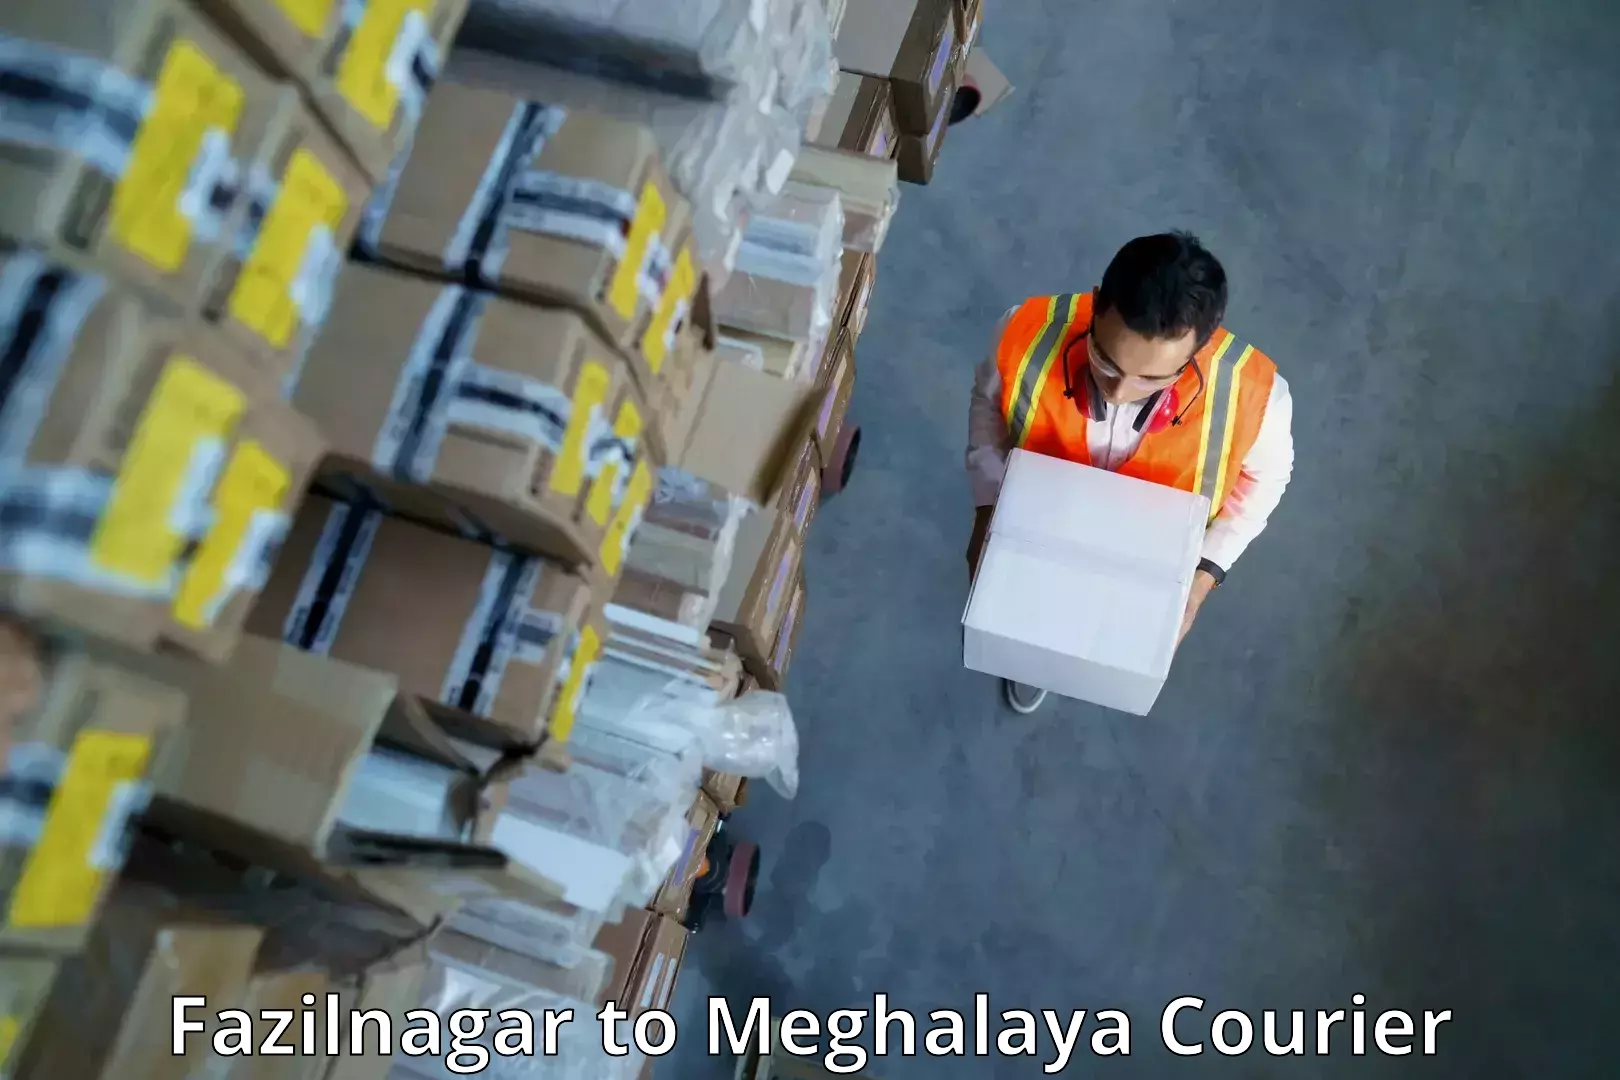 International courier networks Fazilnagar to Shillong